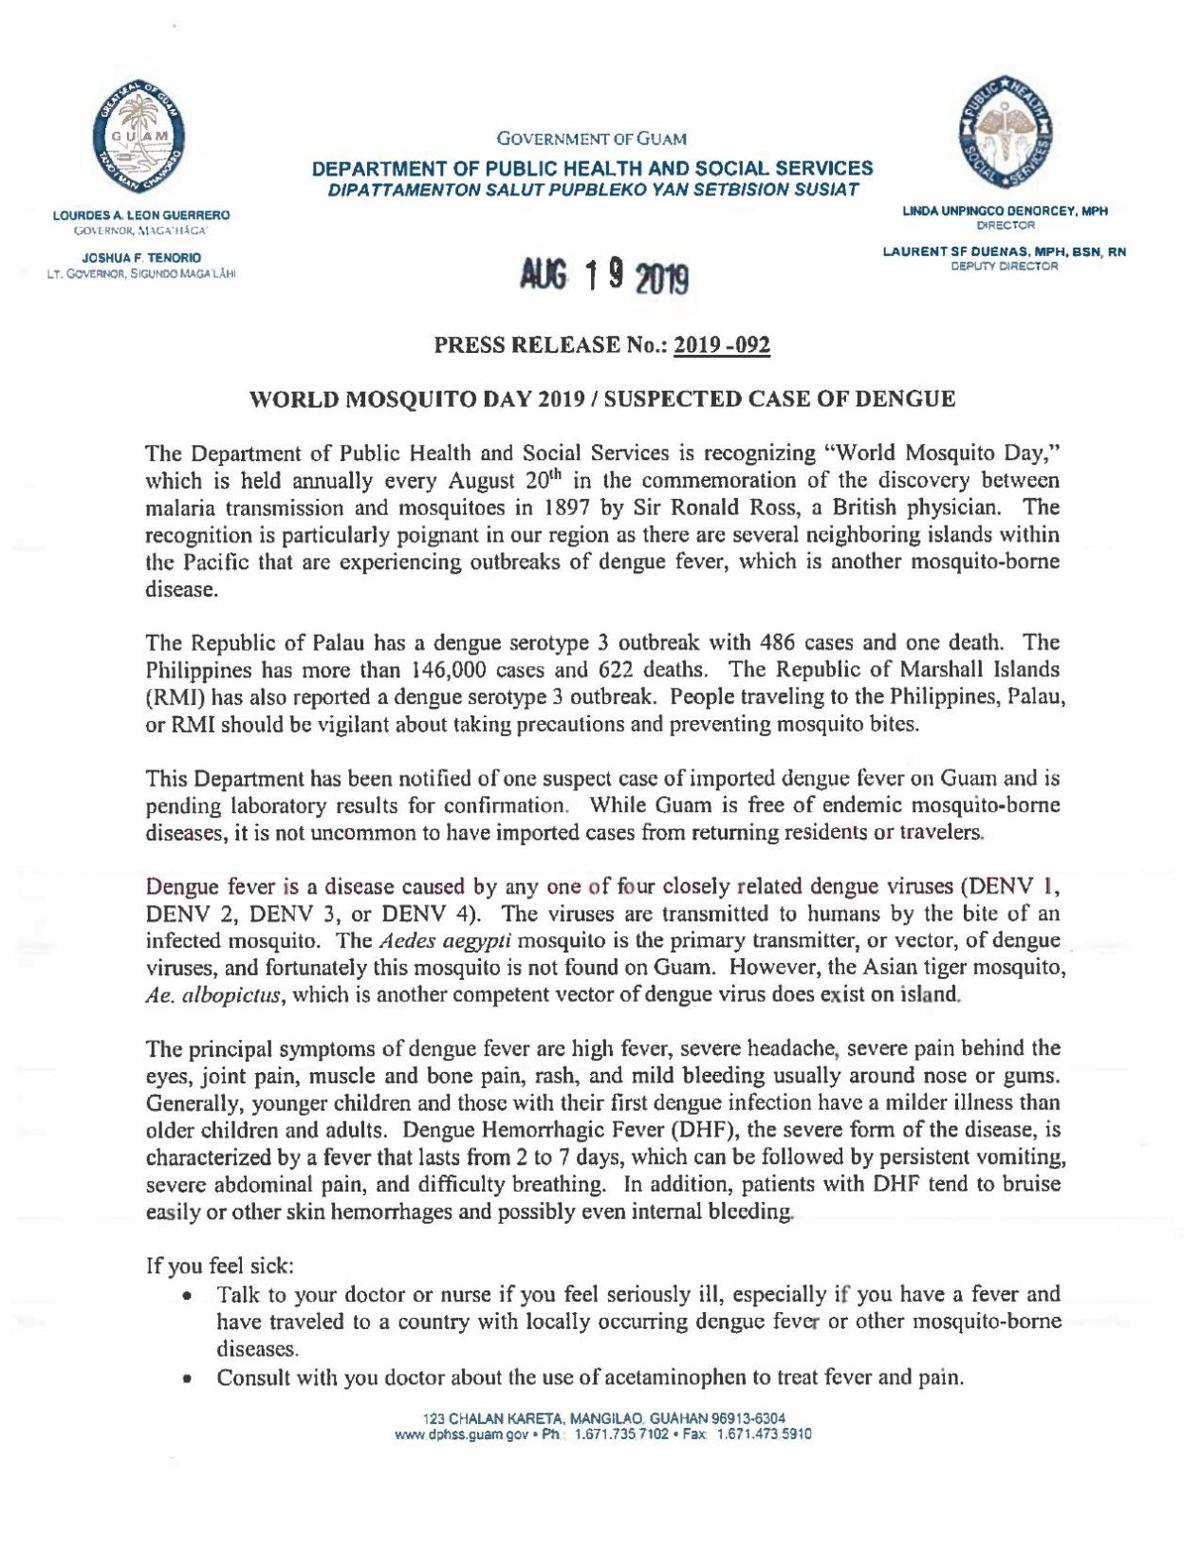 Public Health Press Release Guam News 4665